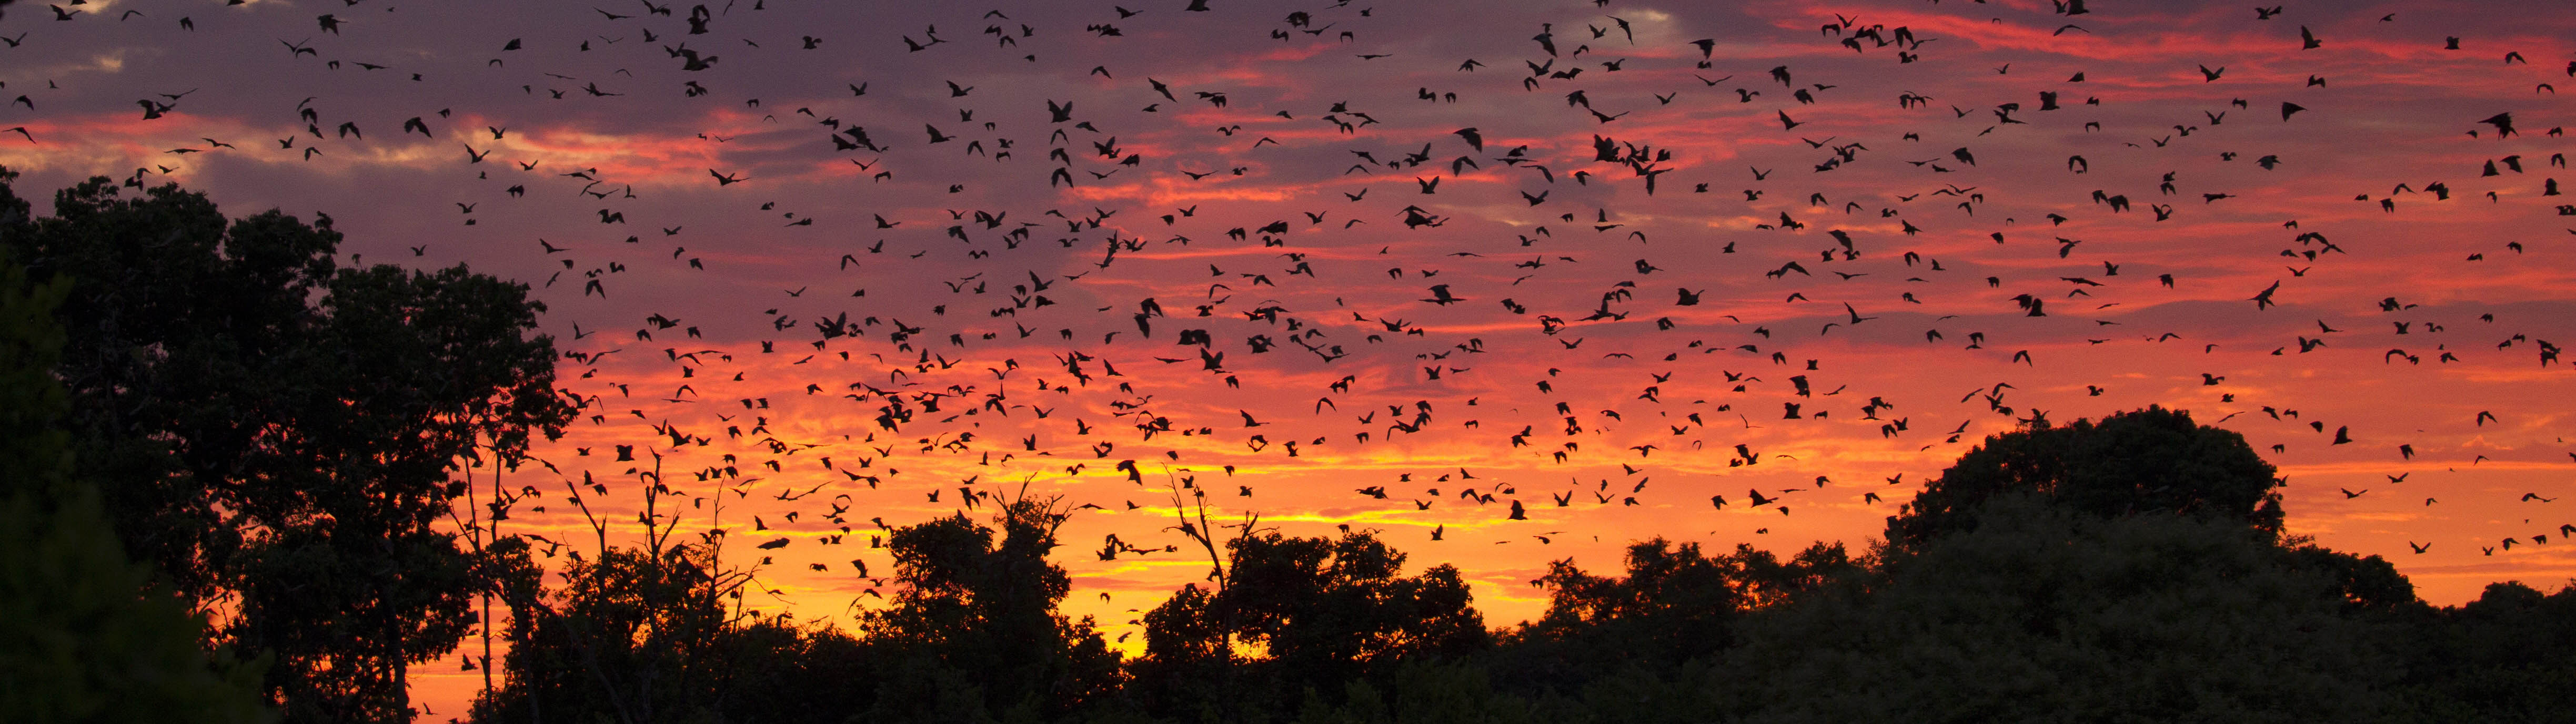 Fruit bat migration | Gilmour Dickson of Kaingu Safari Lodge